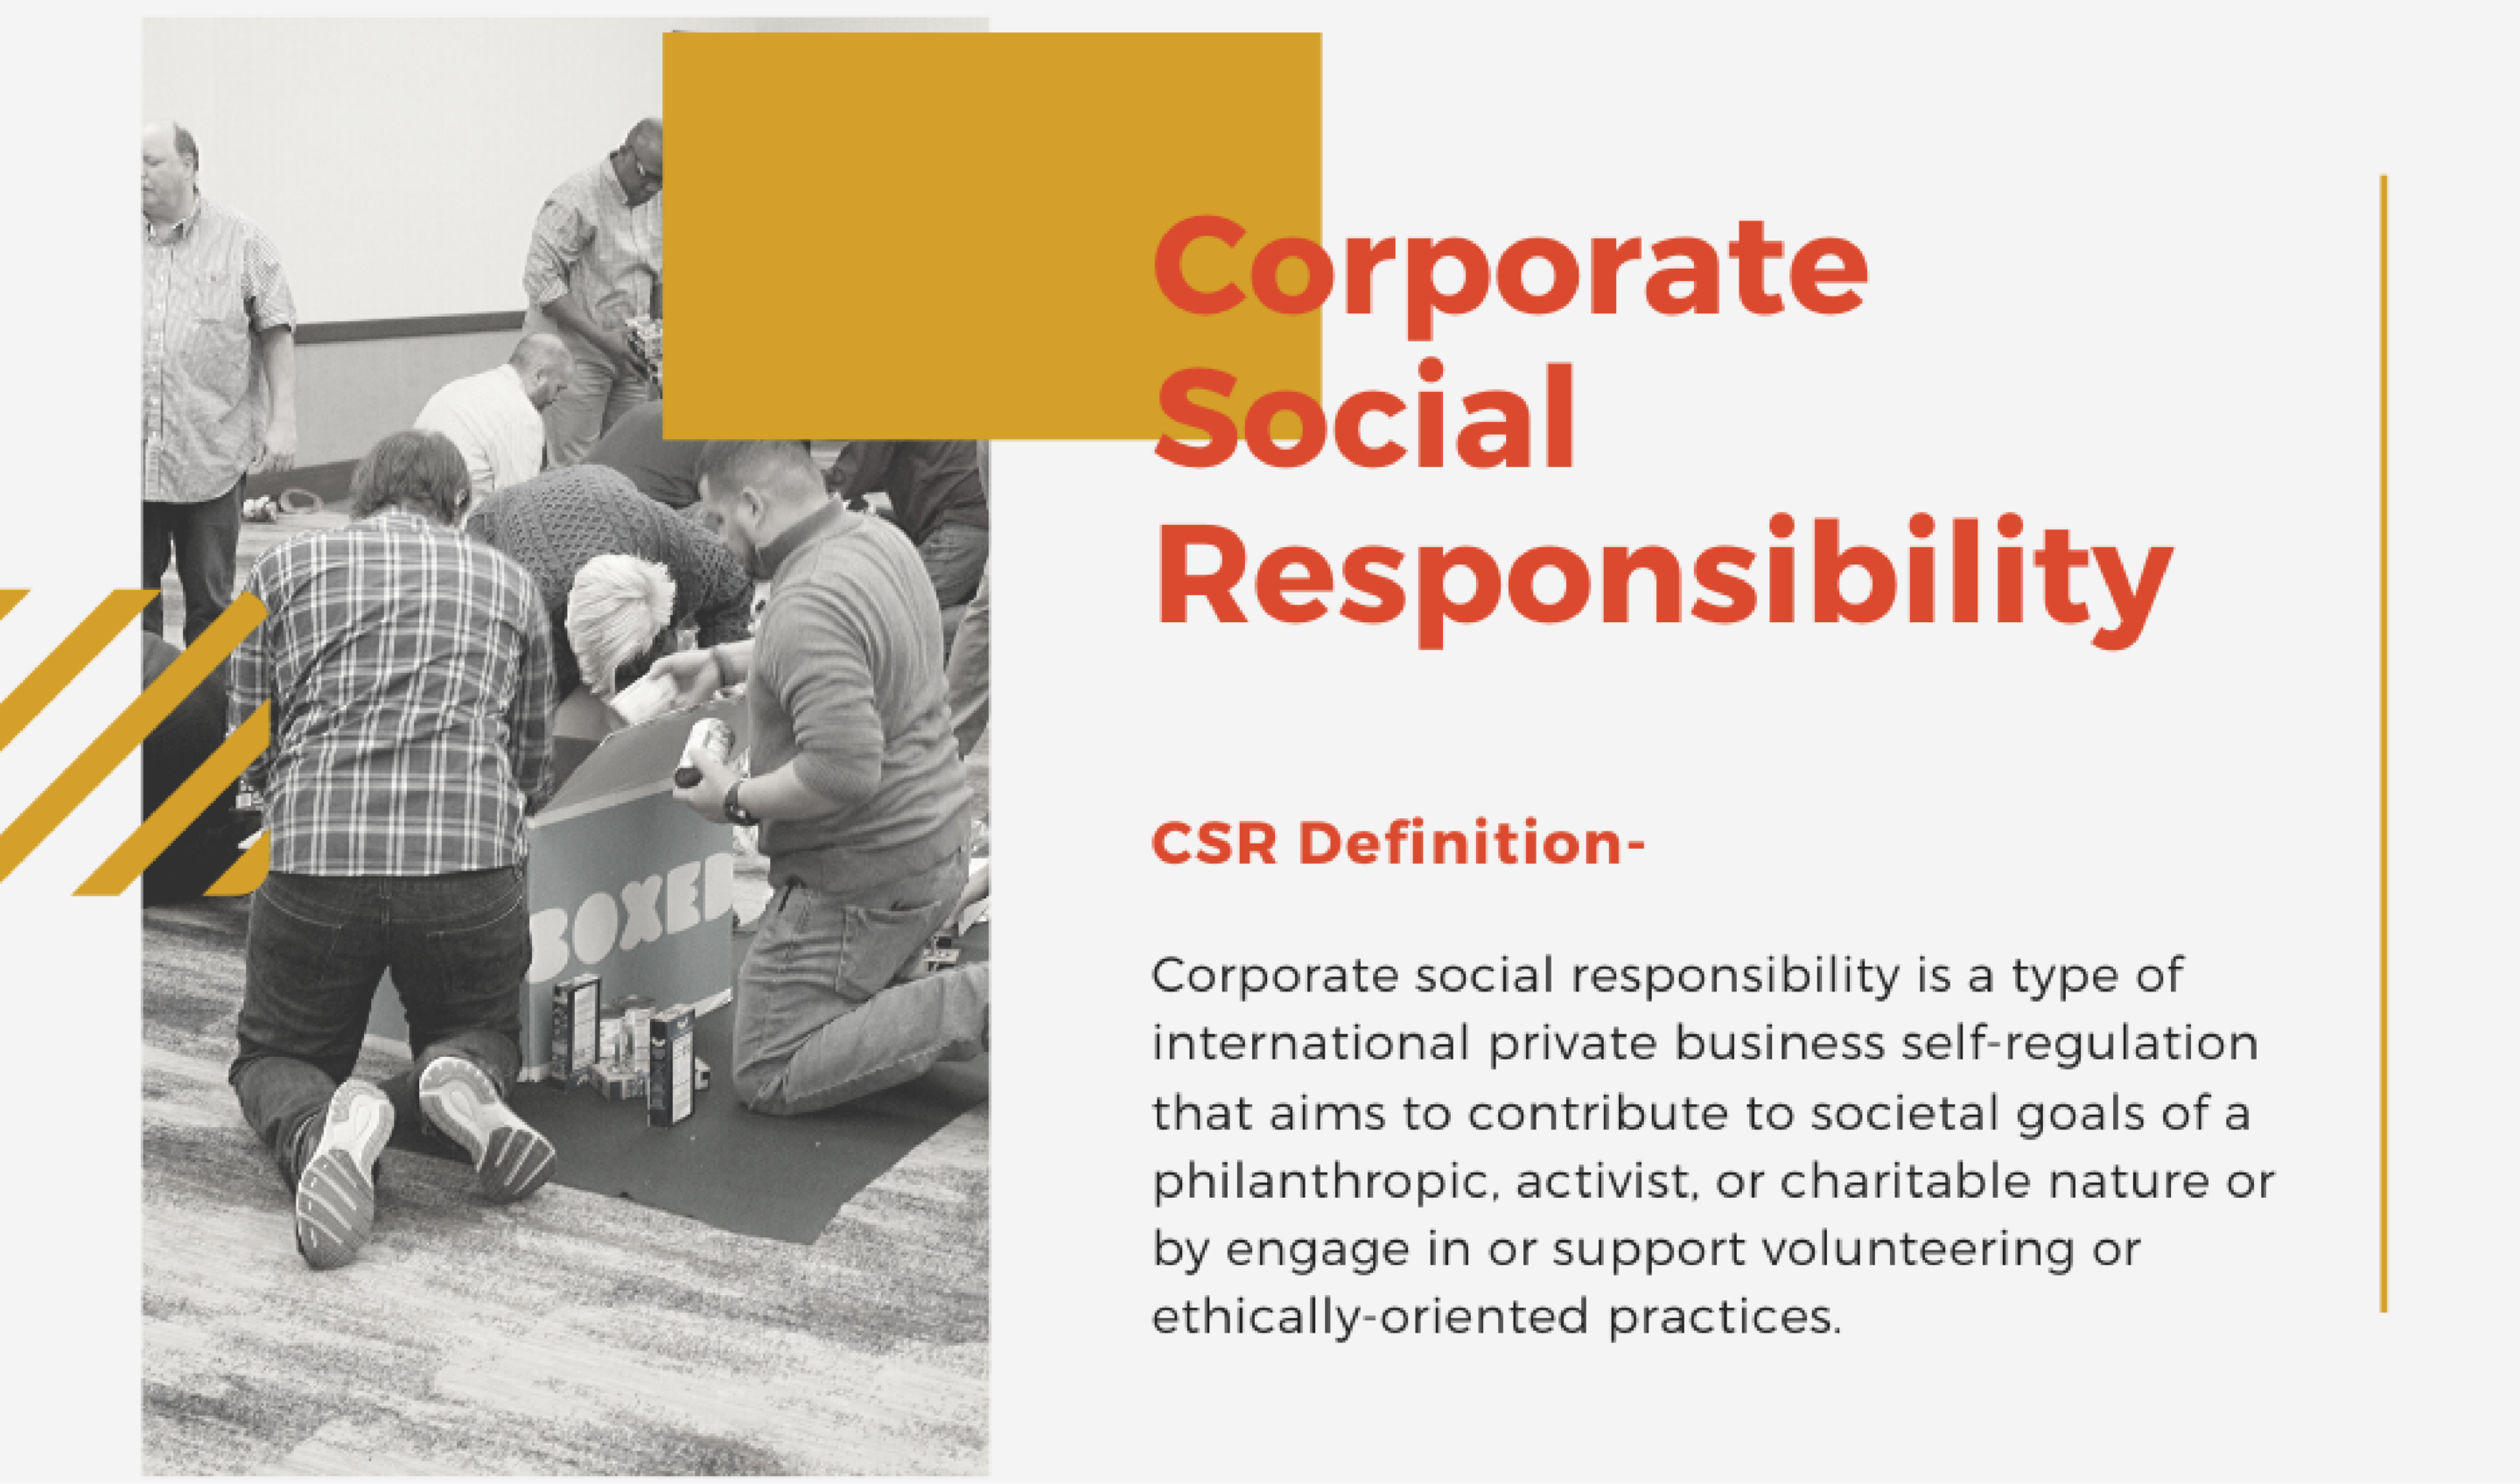 corporate social responsiveness definition